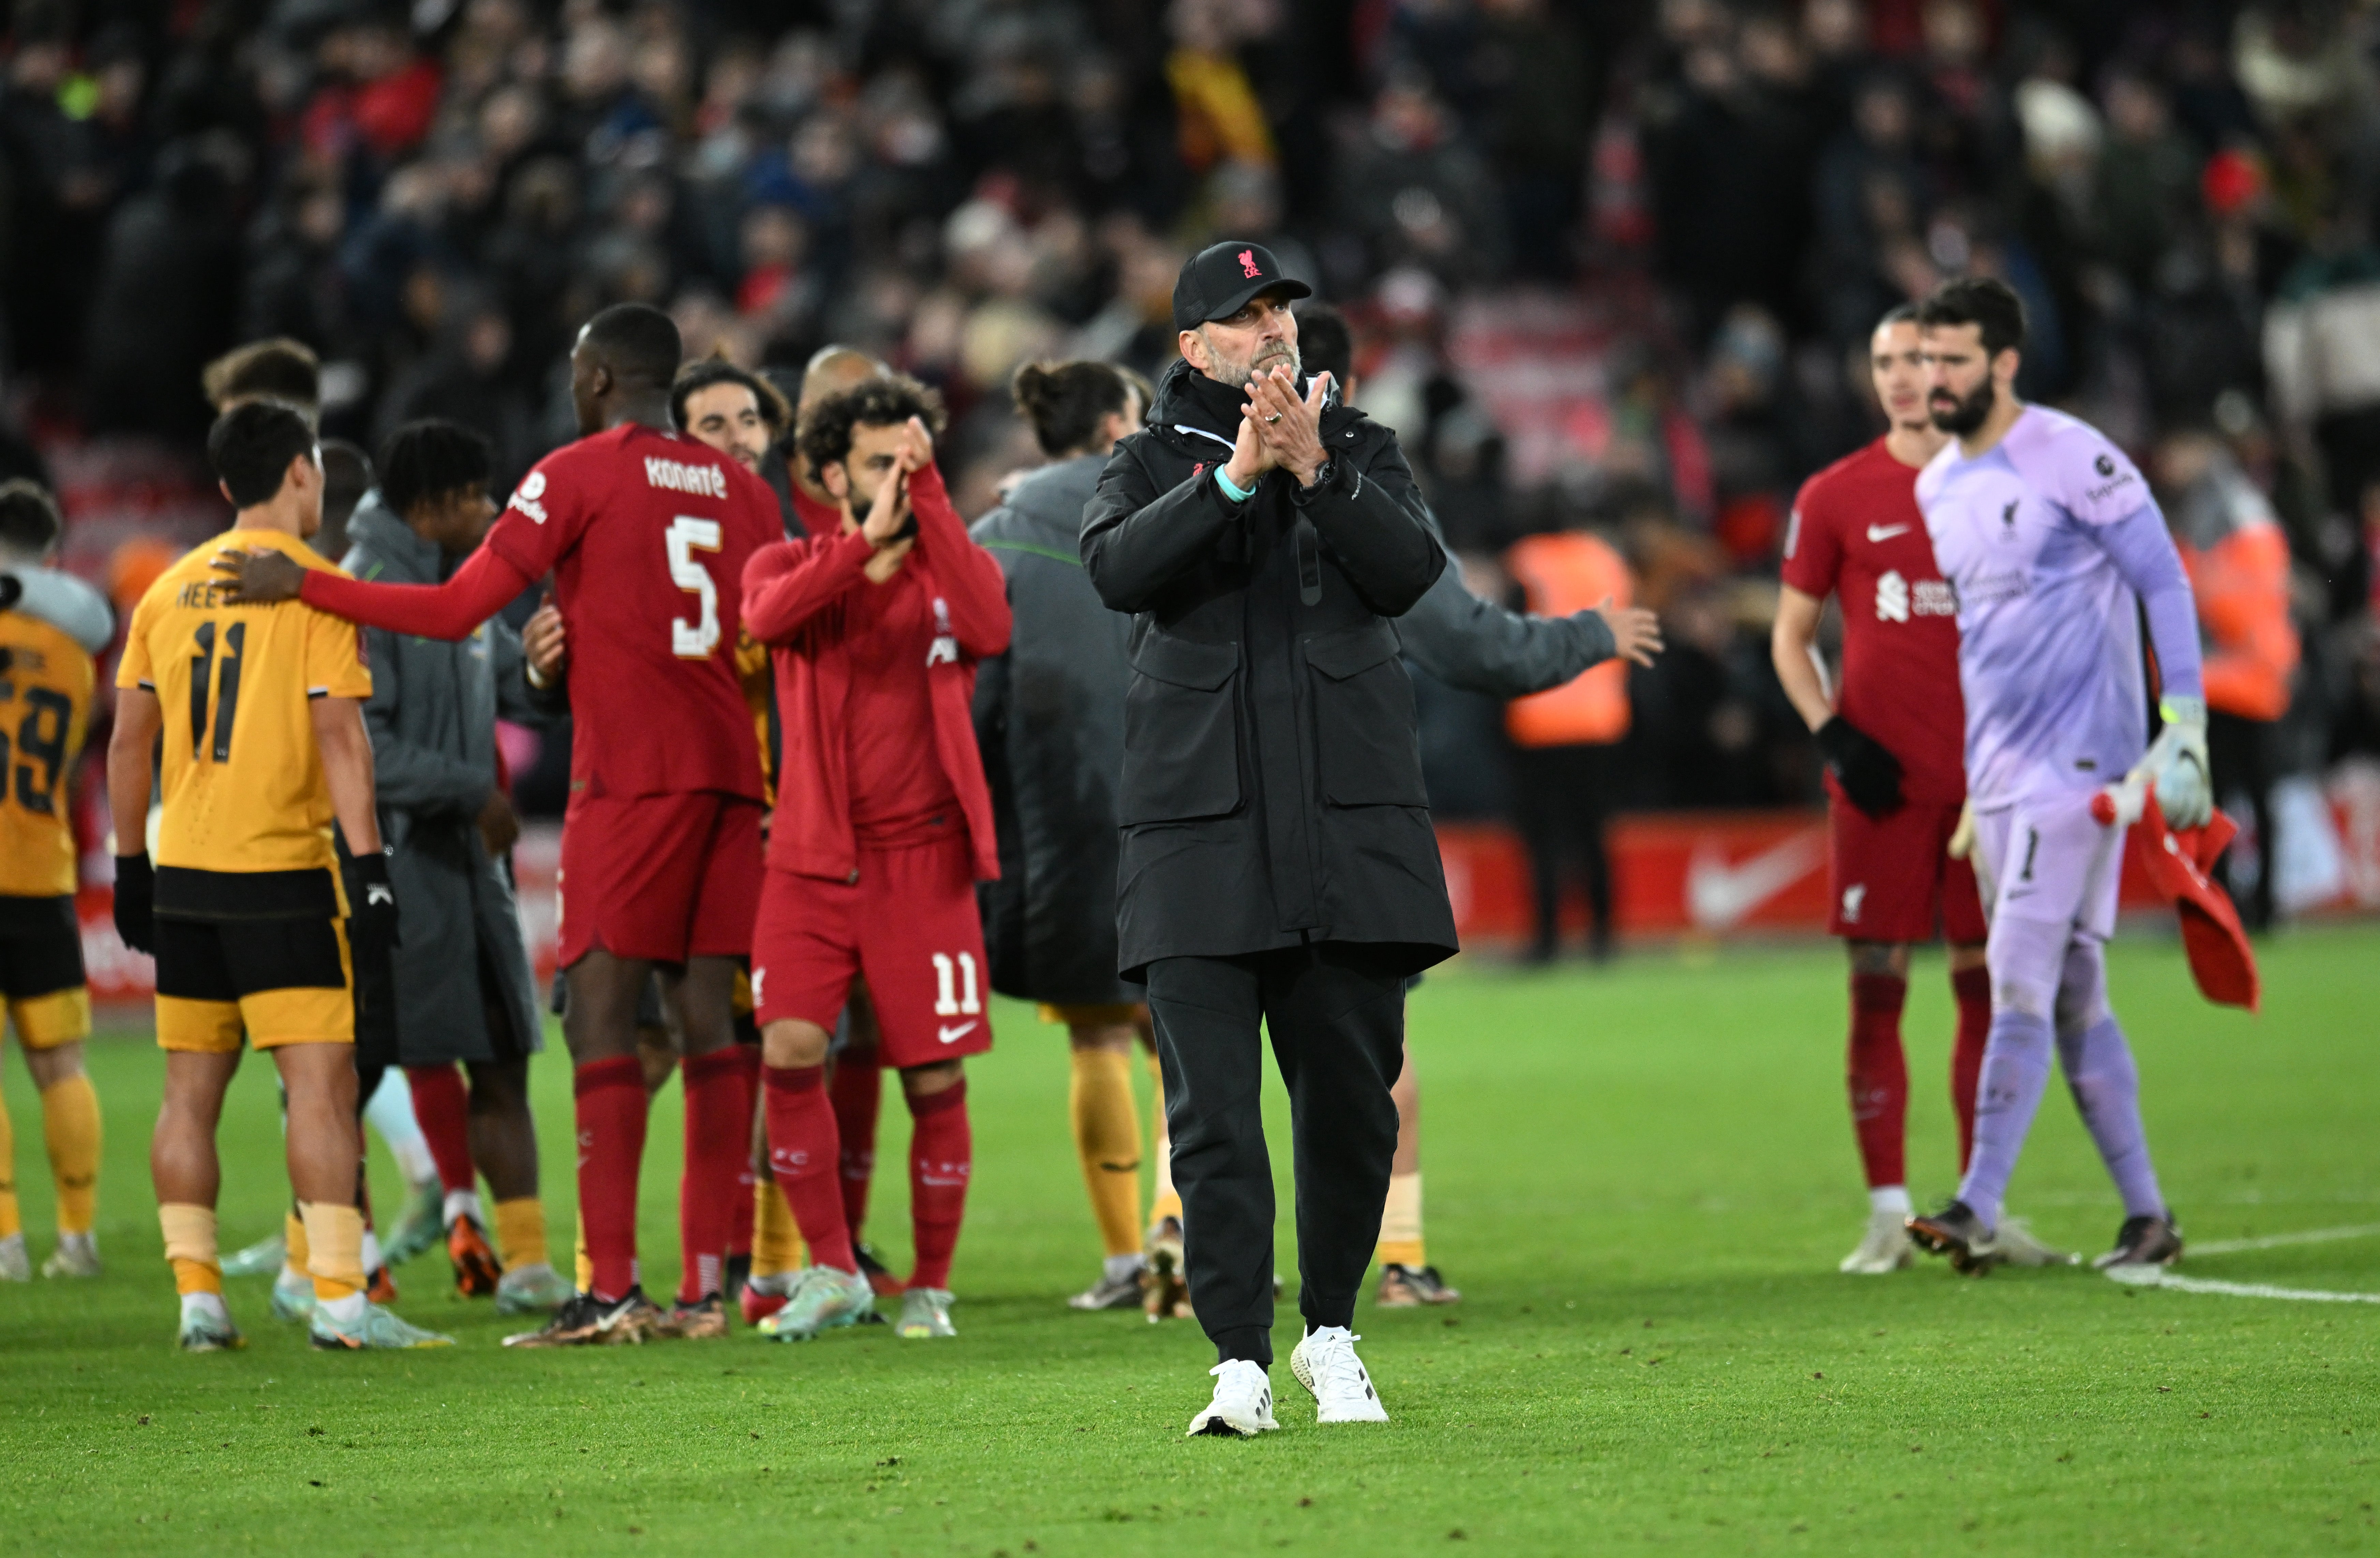 Jurgen Klopp applauds the Liverpool fans after another frustrating performance